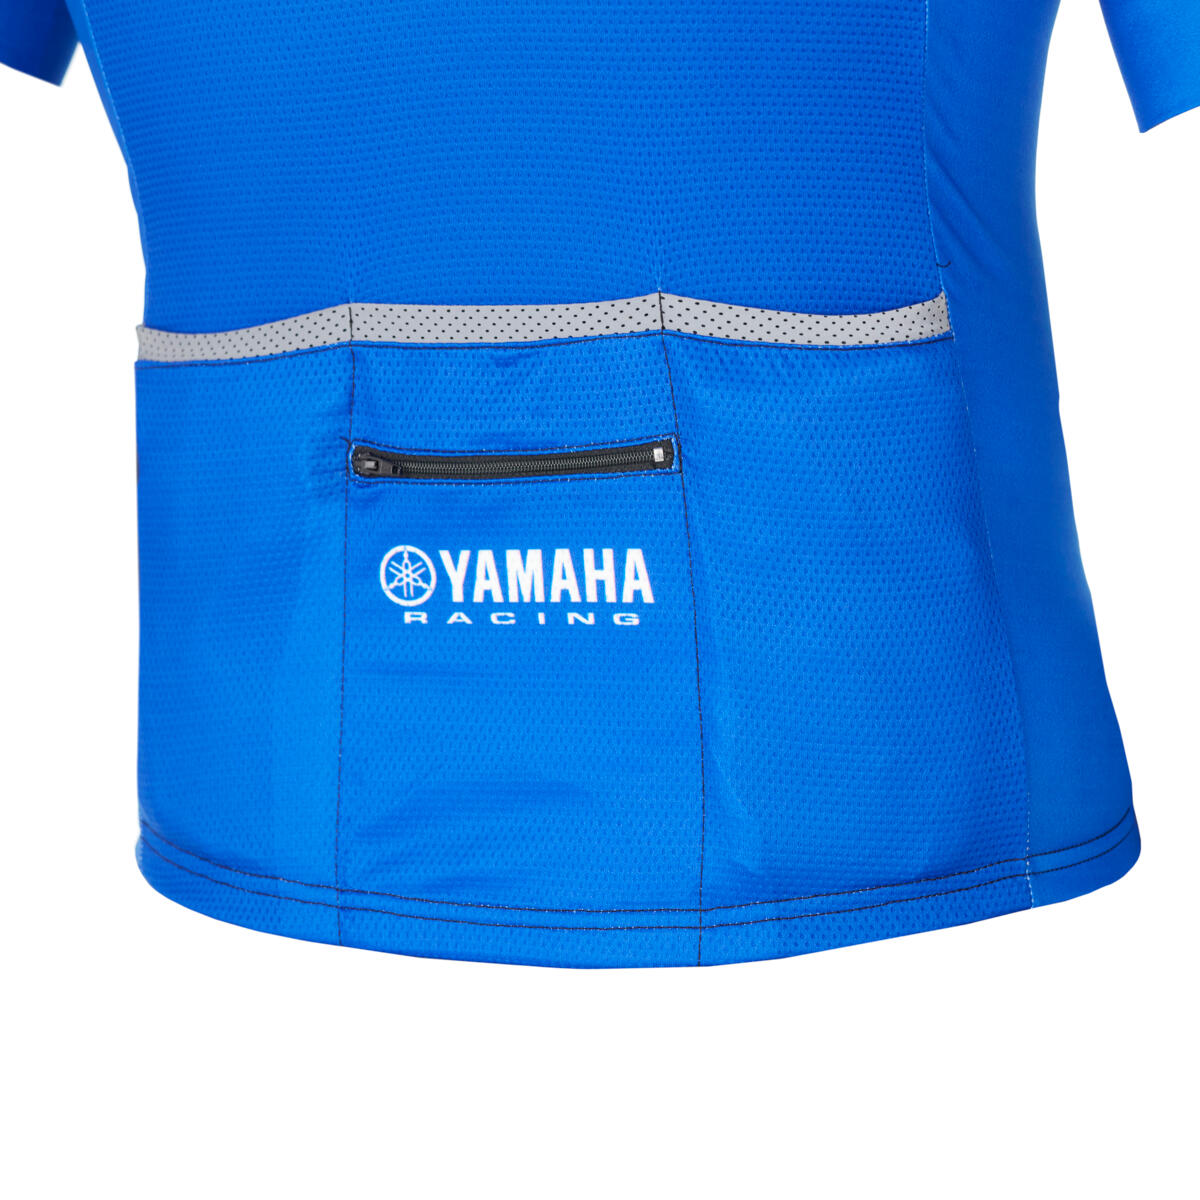 Yamaha Road Racing Bike Jersey